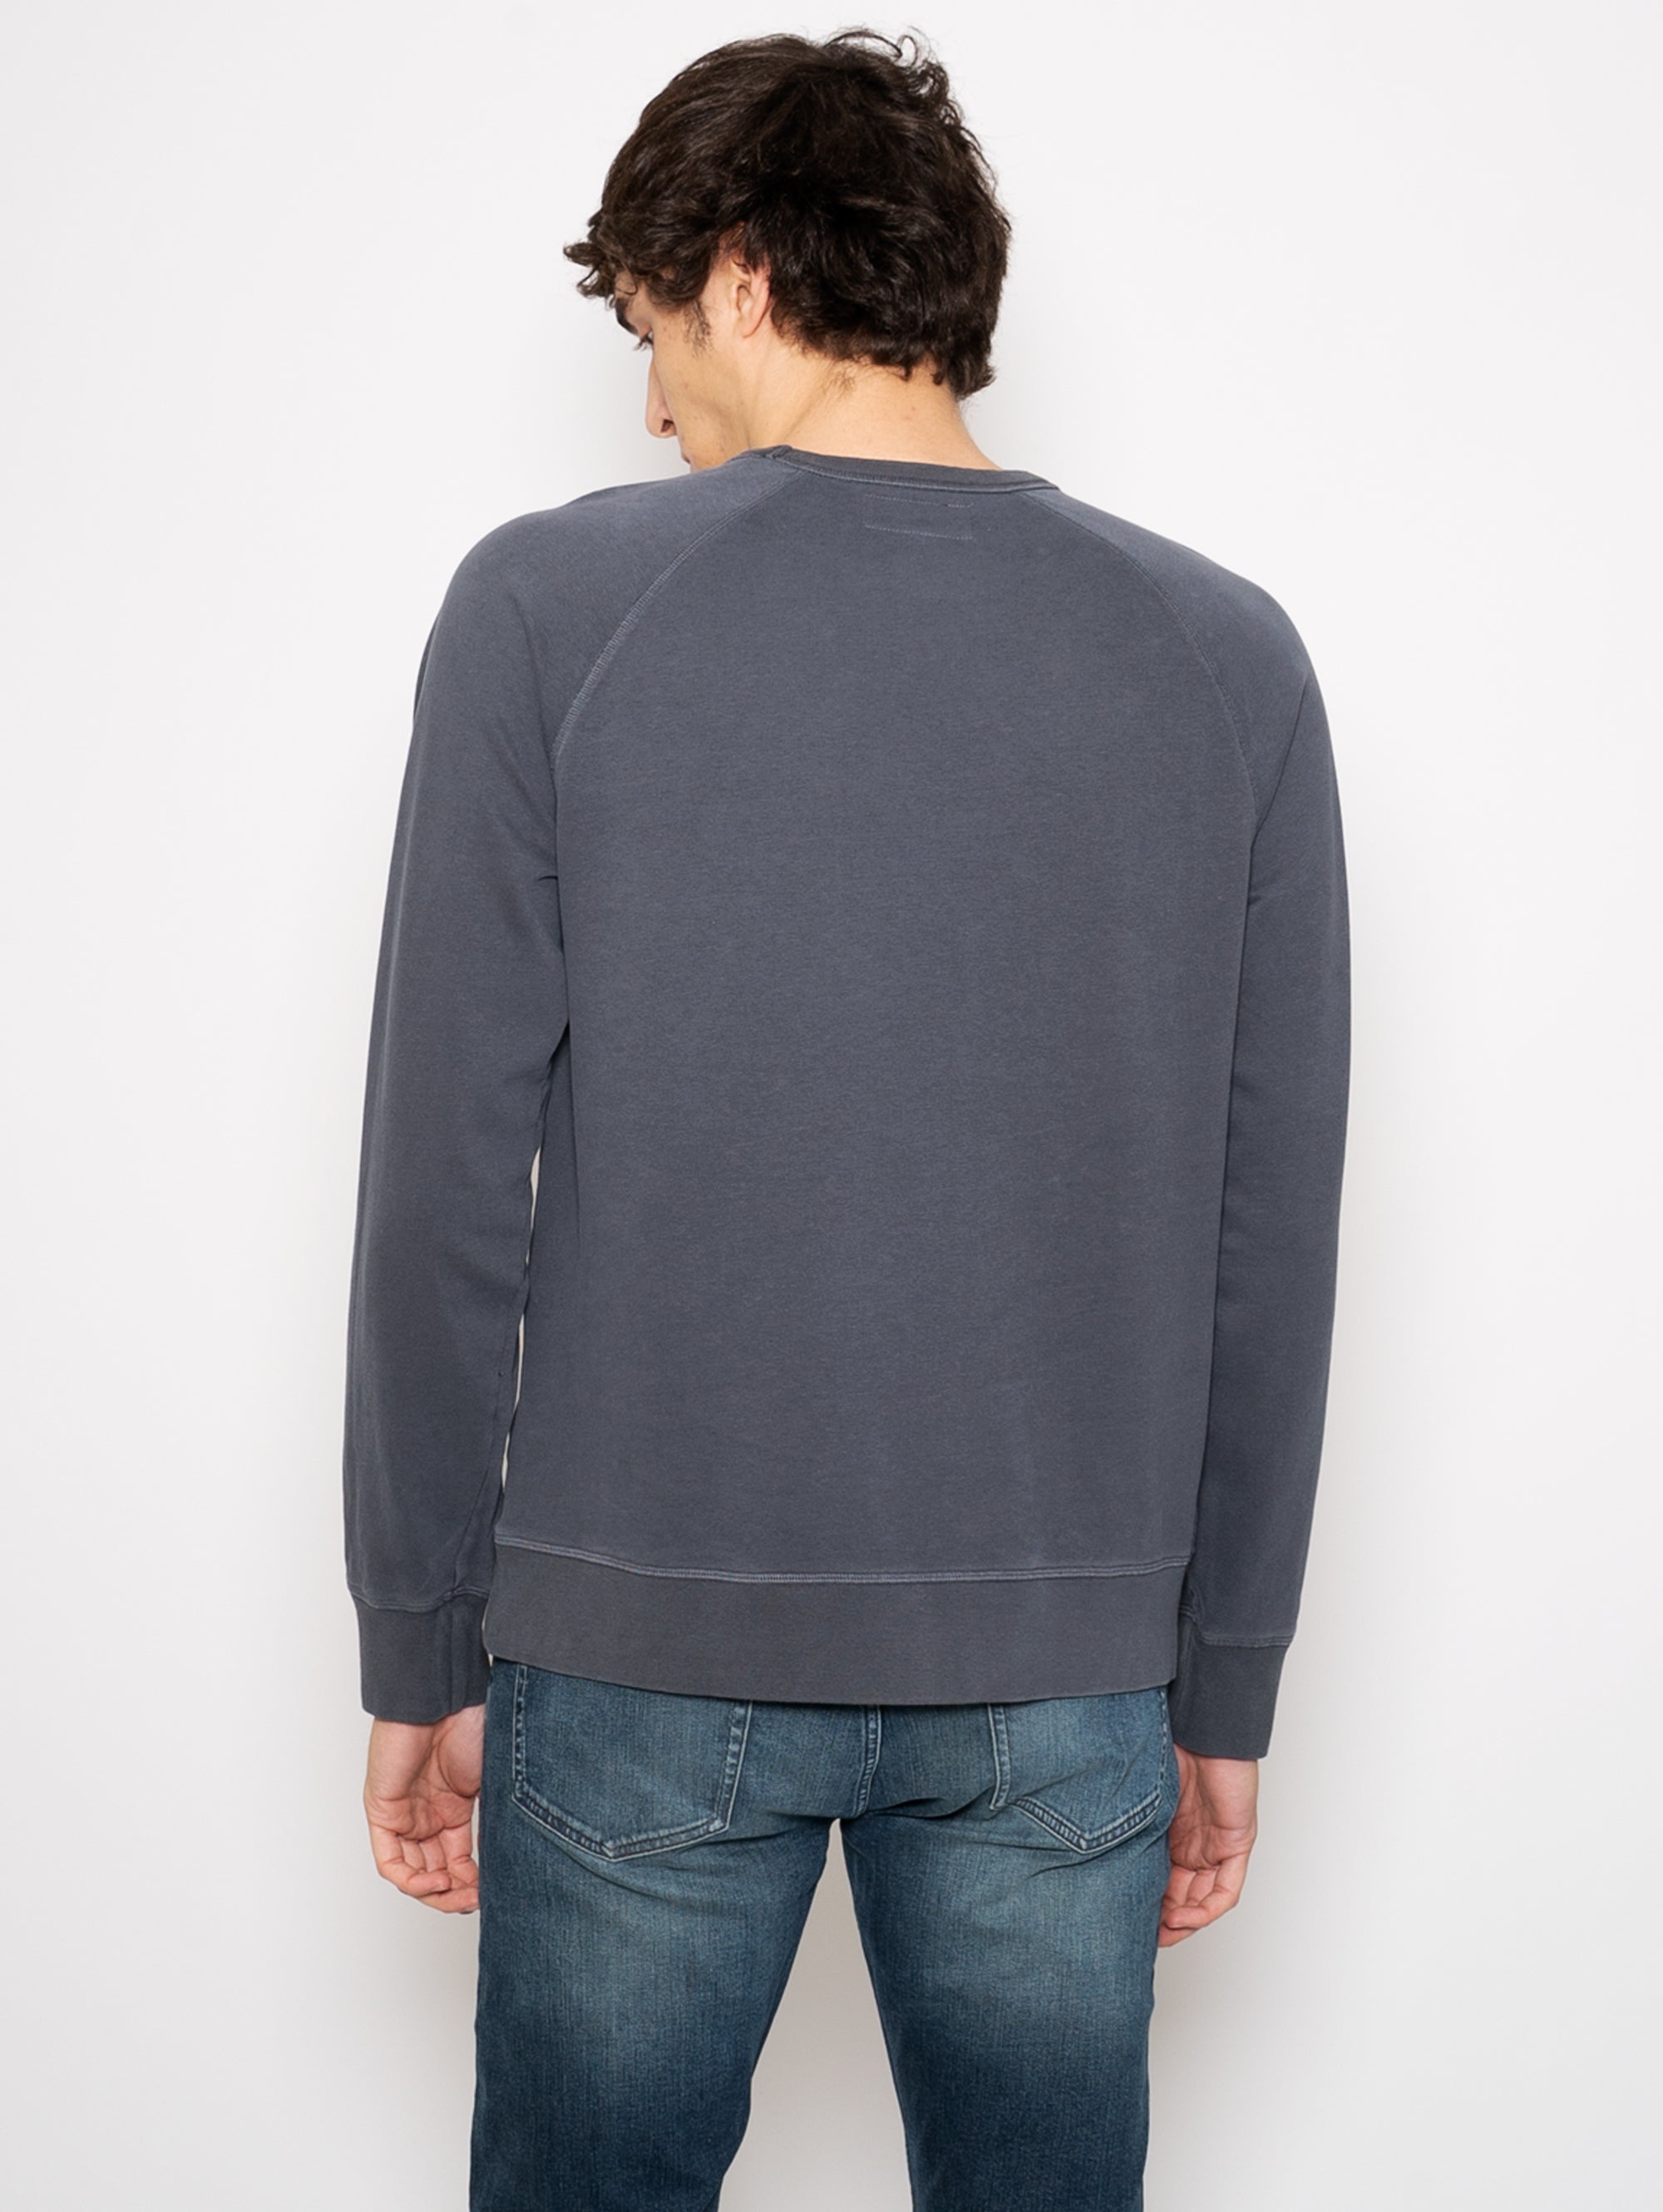 Sweatshirt with Gray Pocket